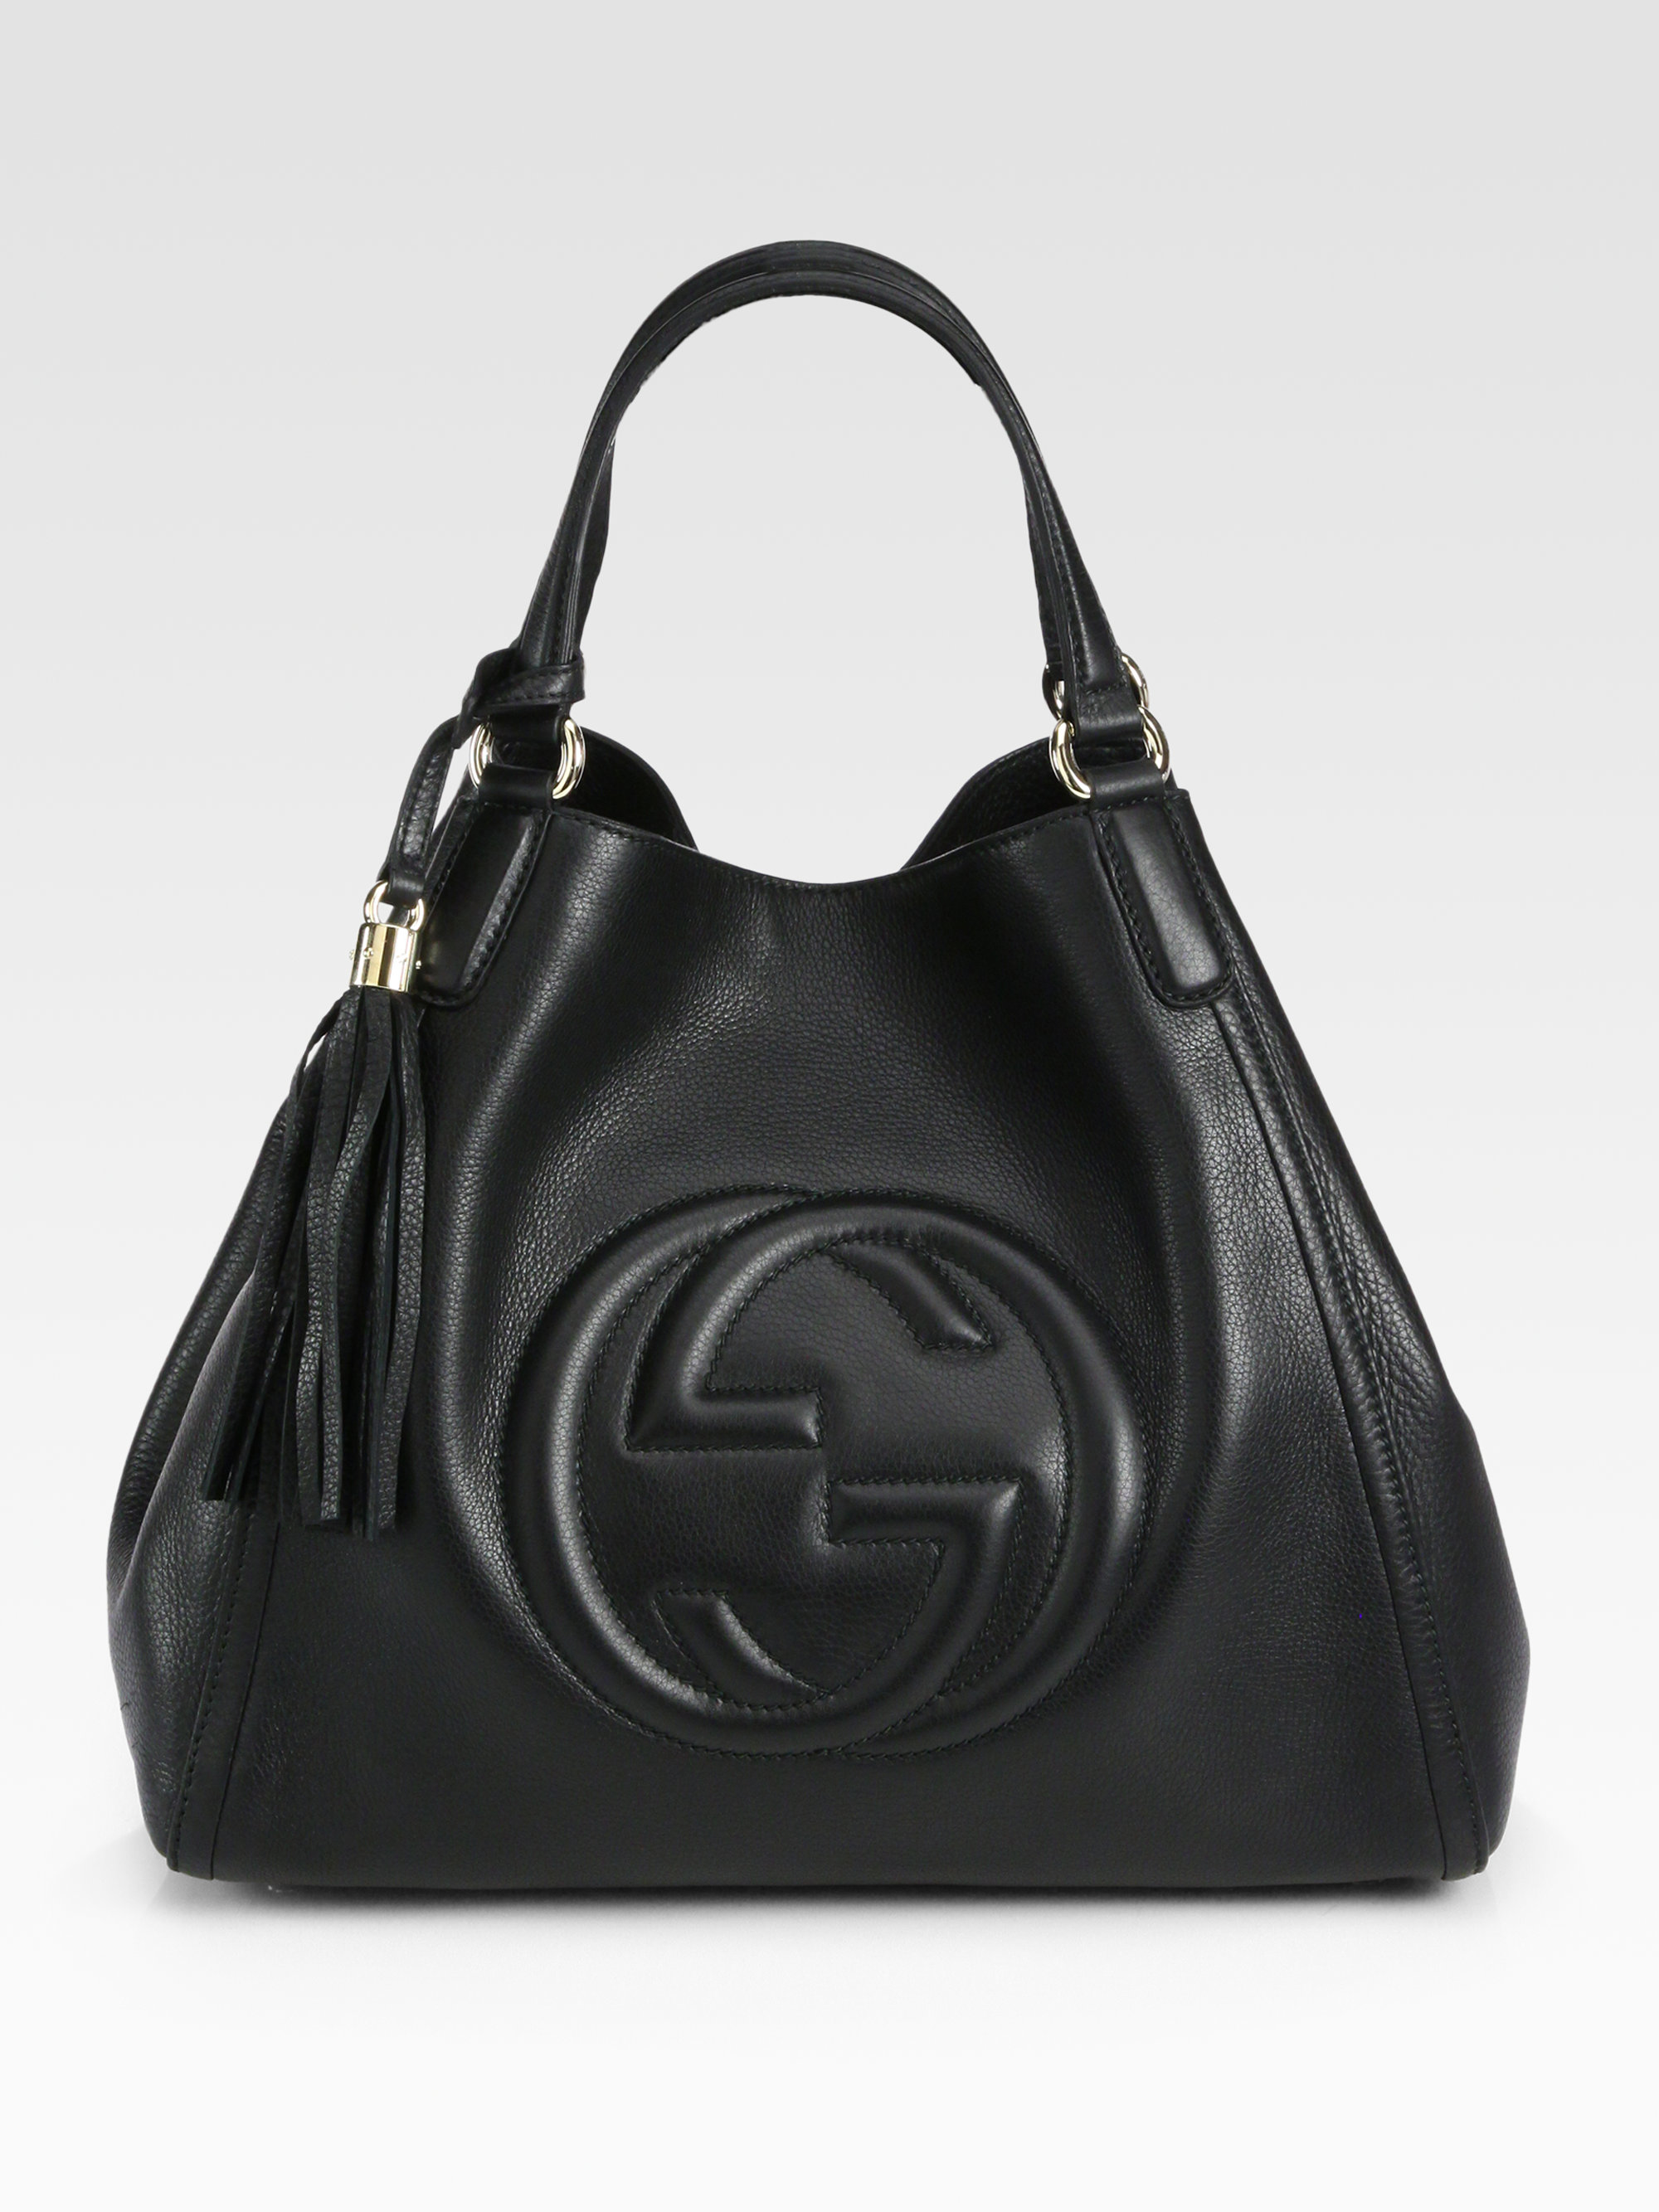 Gucci Soho Medium Hobo Bag in Black (dark navy) | Lyst